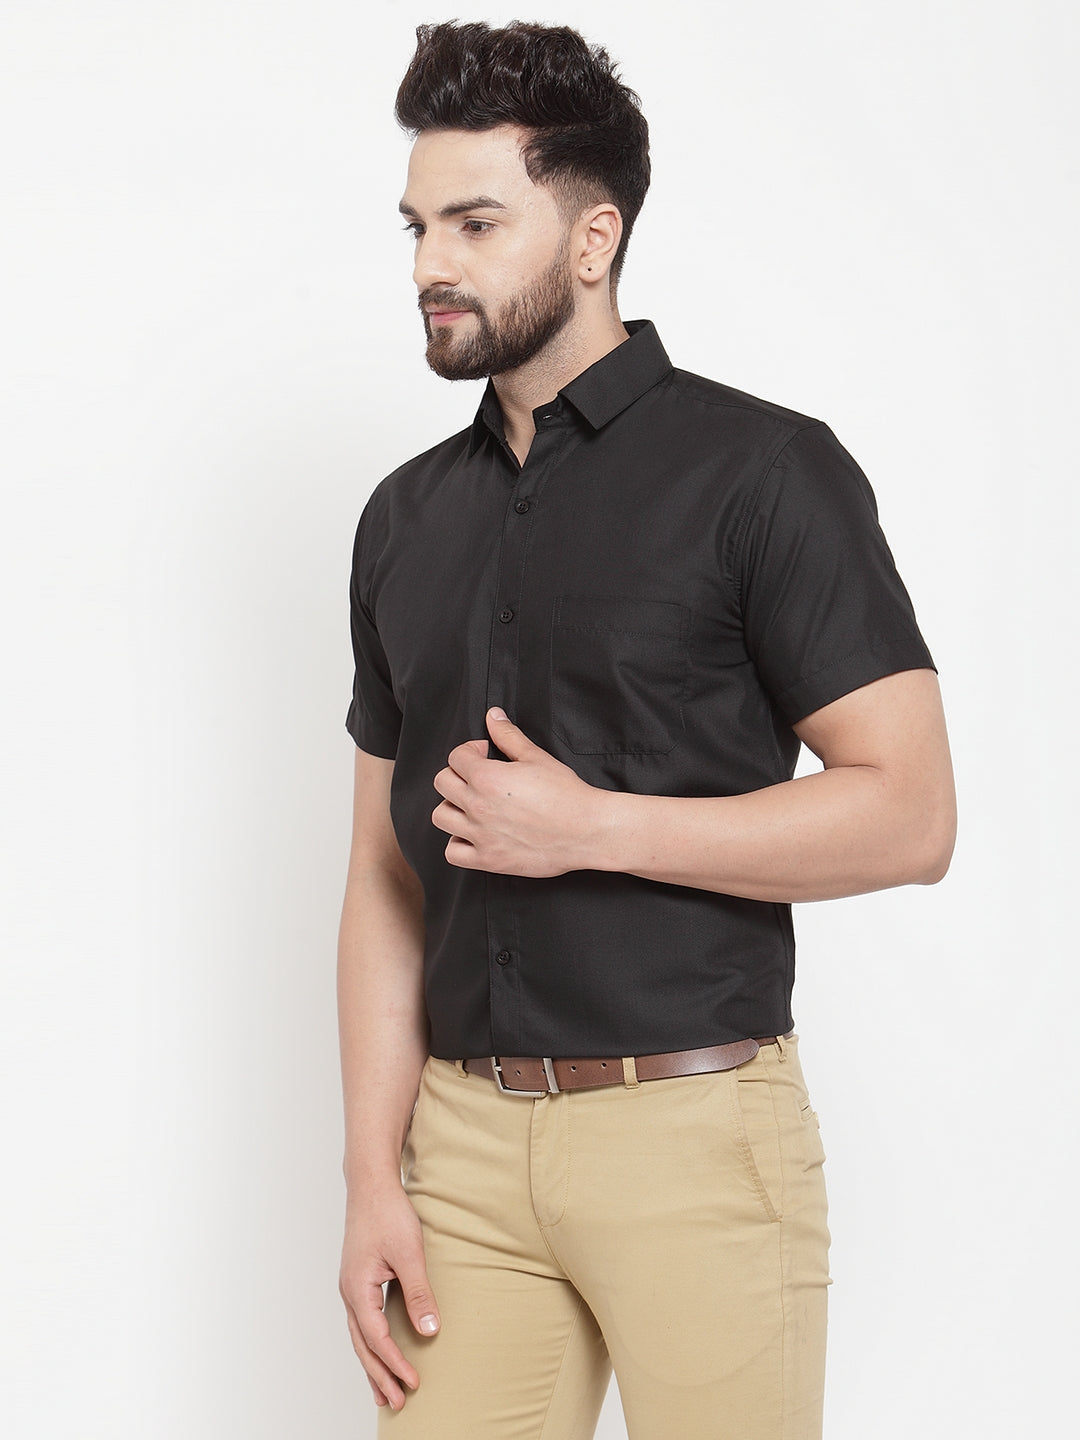 Men's Black Cotton Half Sleeves Solid Formal Shirts ( SF 754Black ) - Jainish